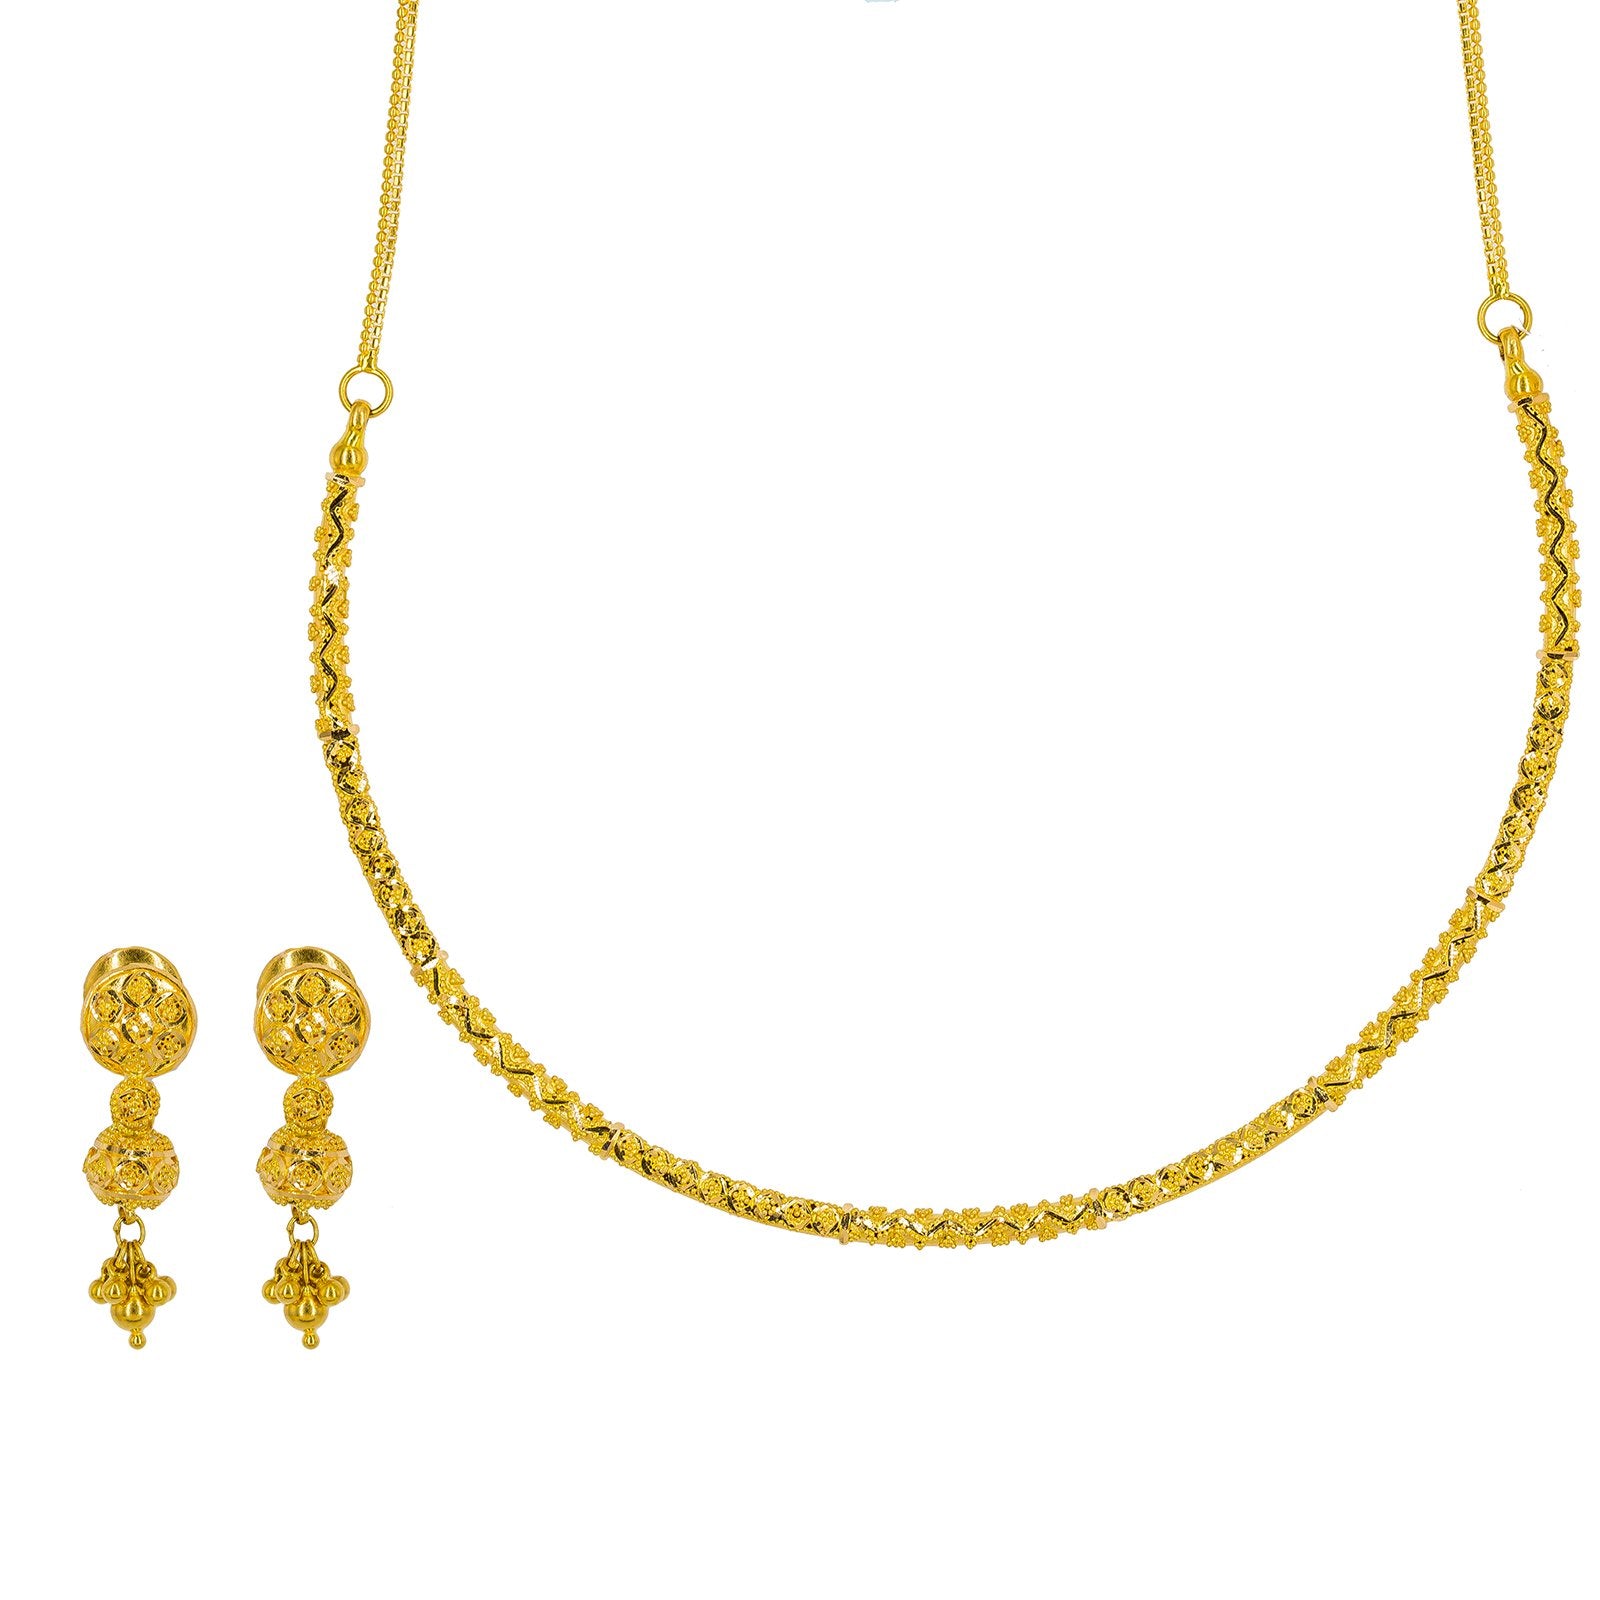 Asian Women Bridal Fashion Jewelry Ethnic 22k Gold Plated Necklace Earrings  Set | eBay